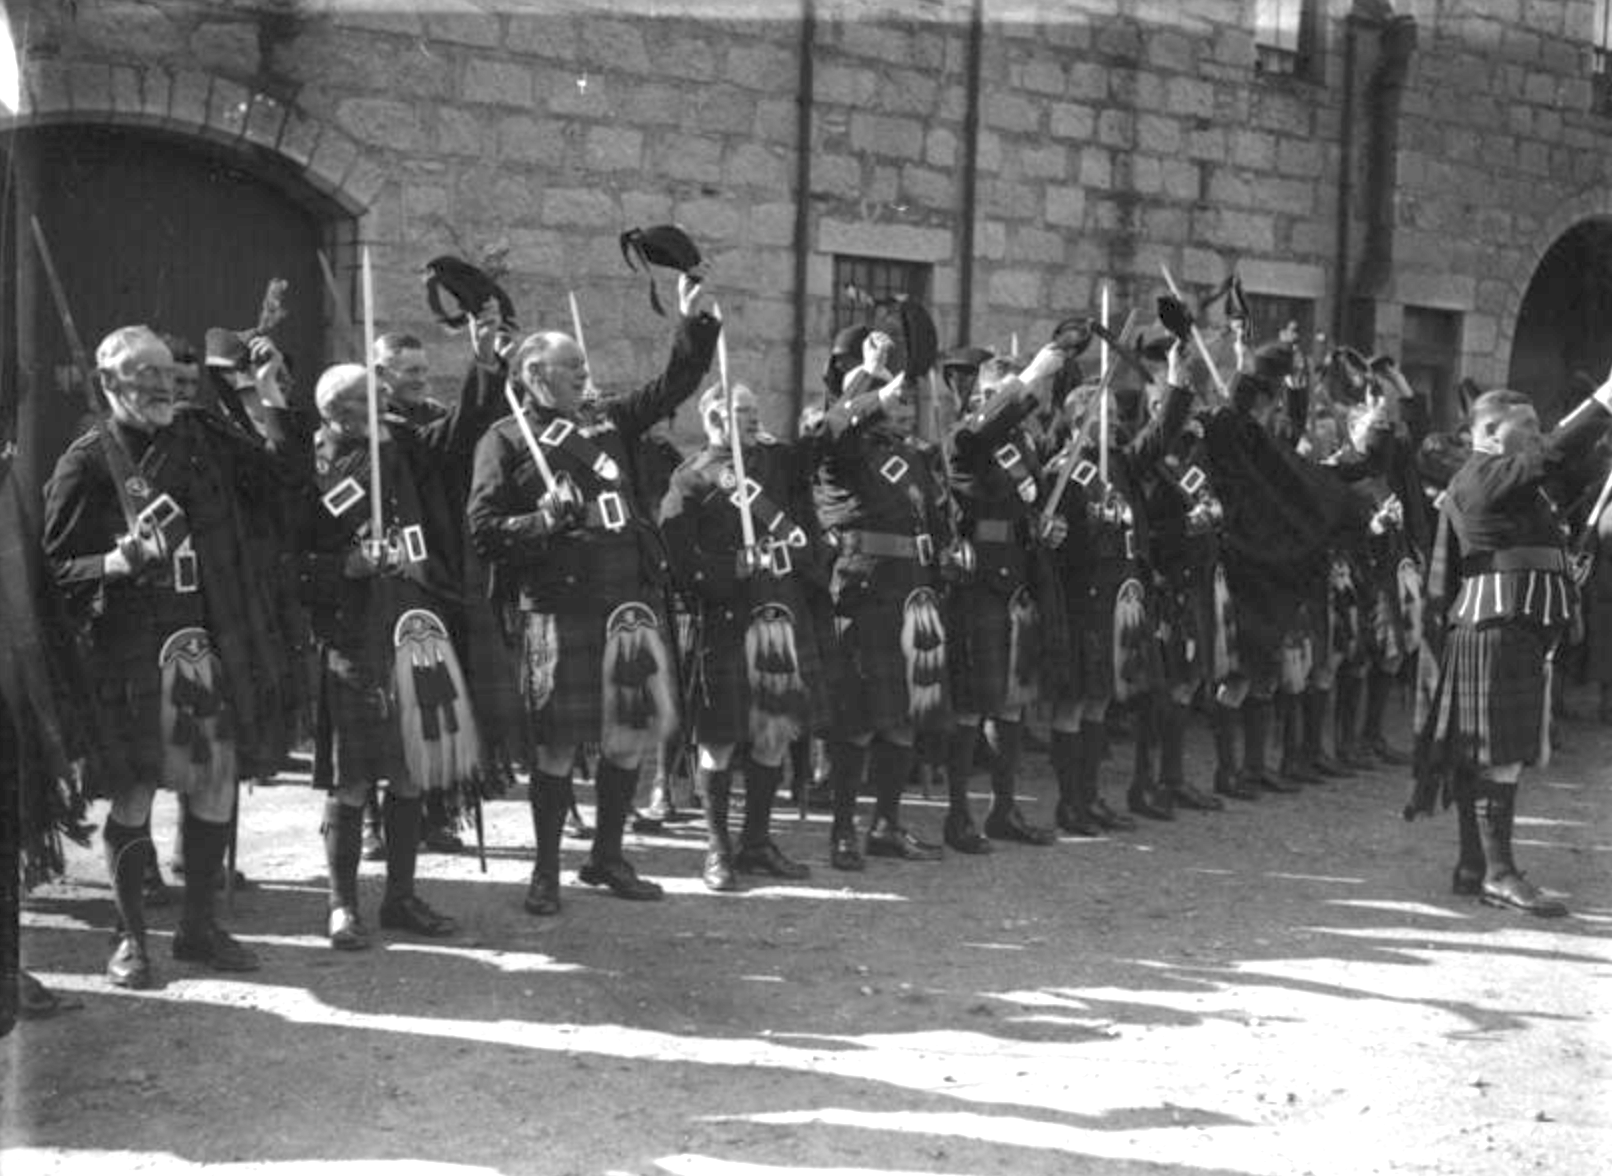 Braemar Gathering. The Invercauld Highlanders raise their broadswords and cheer. 1938